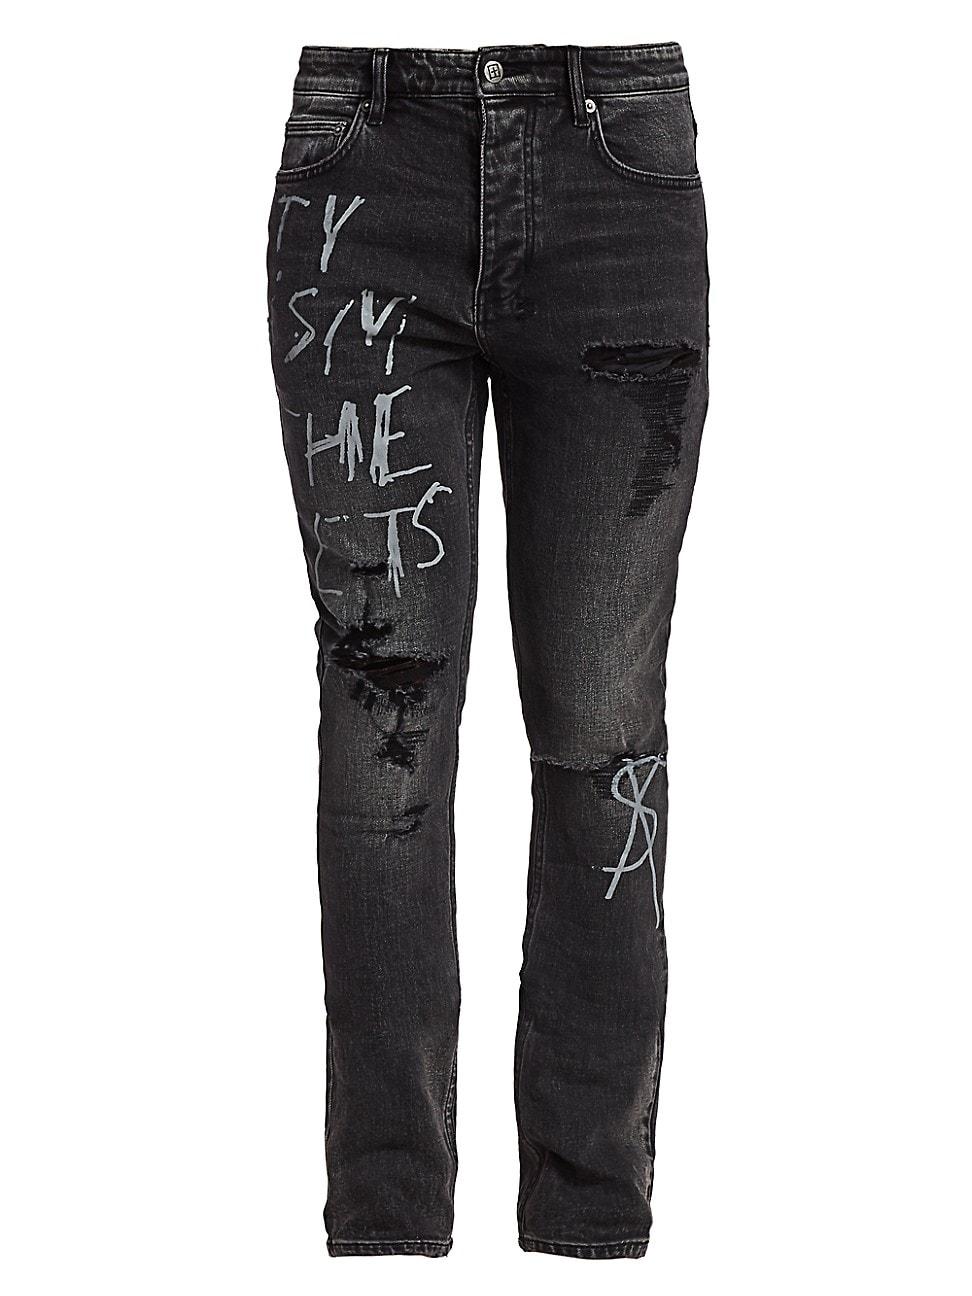 ripped-detail denim jeans Ksubimens Jeans Jeans New goods listing Great